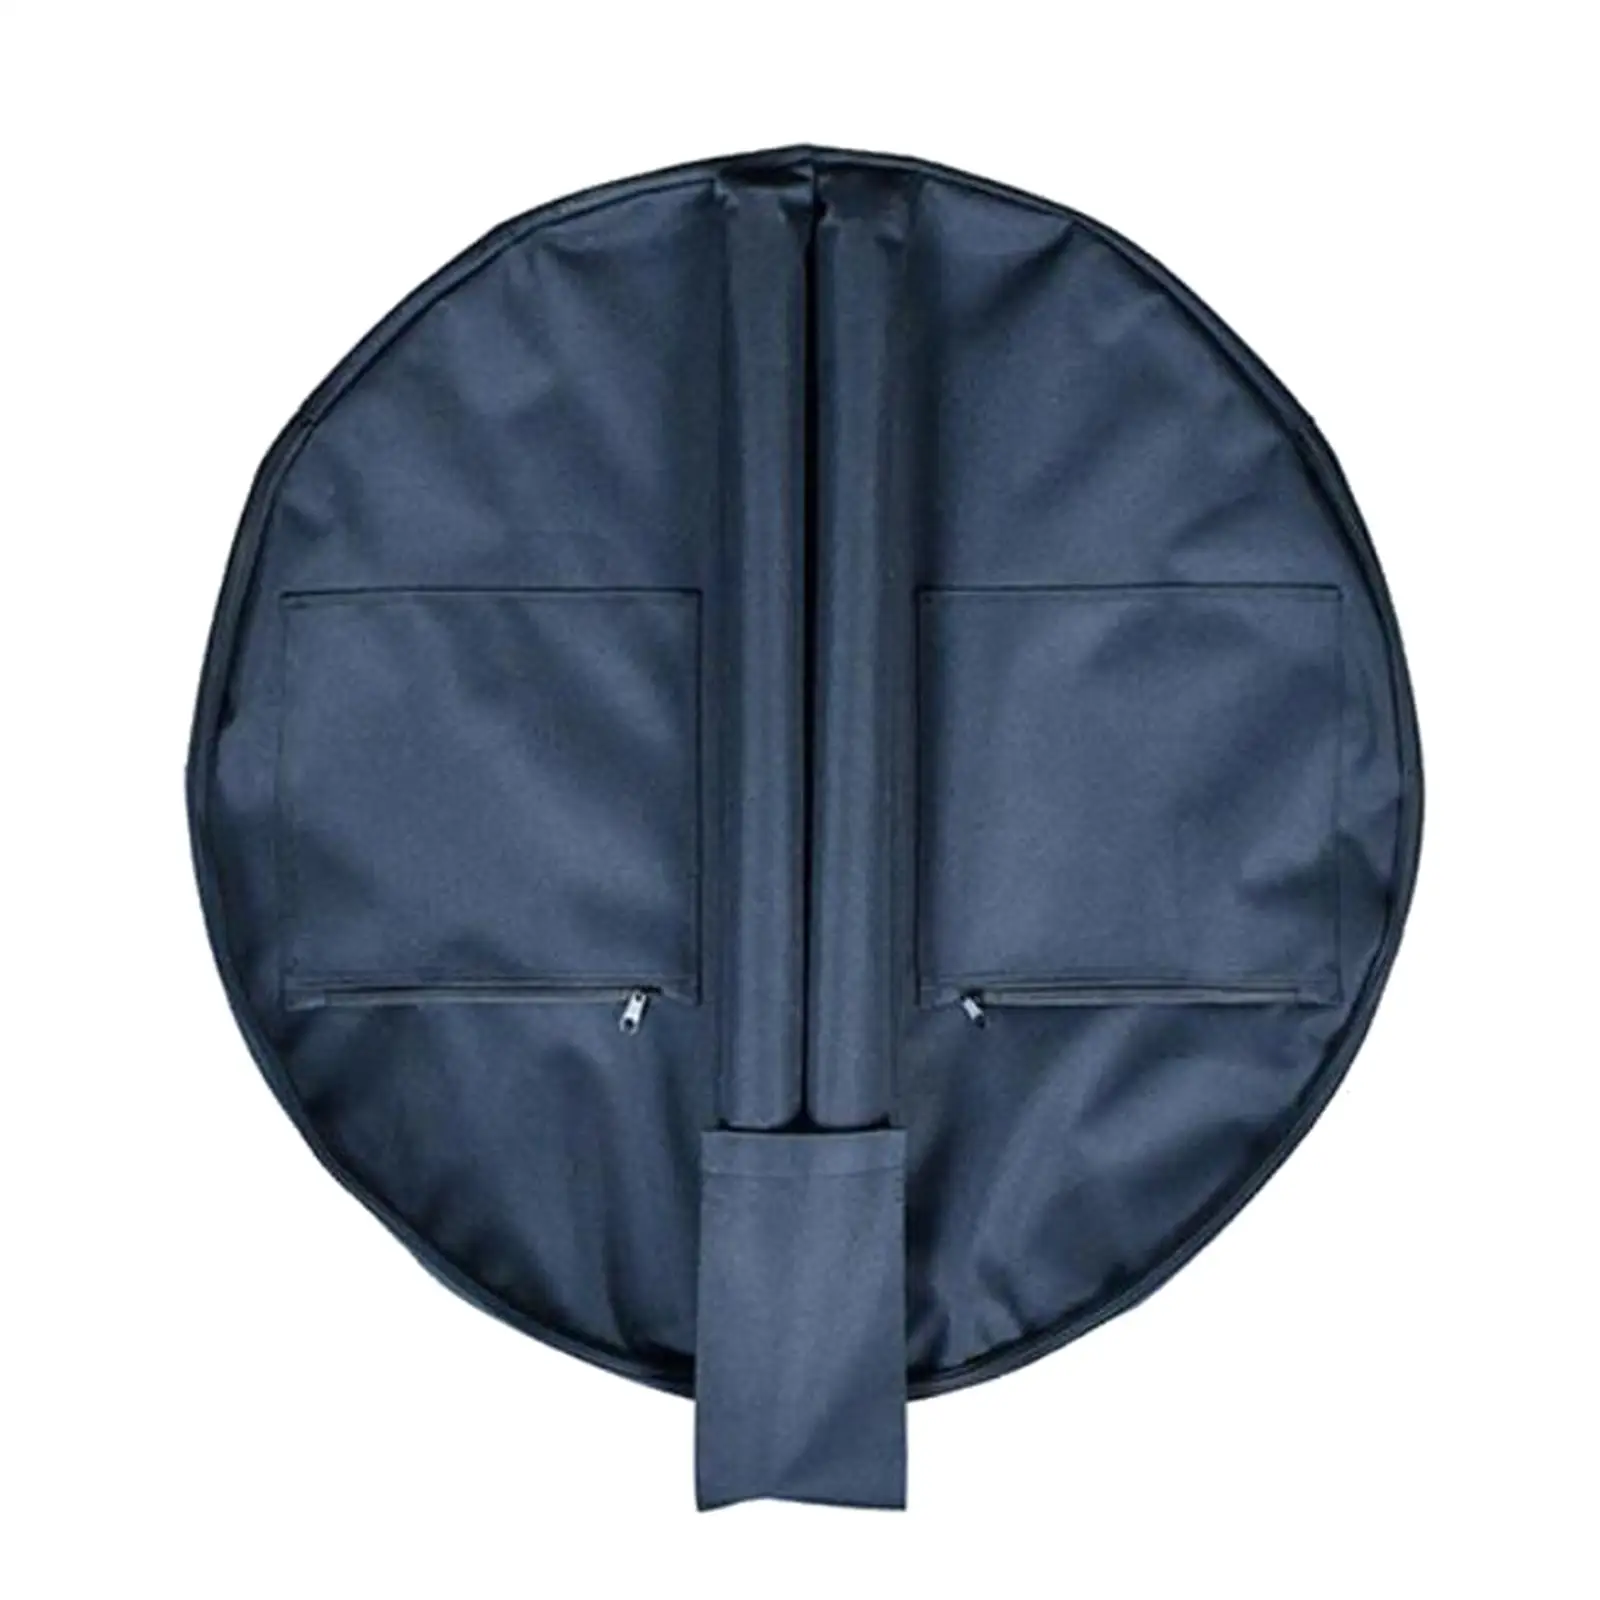 Portable Golf Disc Practice Basket Bag Golf Accessories Storage Organizer Weather Resistant Large Capacity Transit Bag